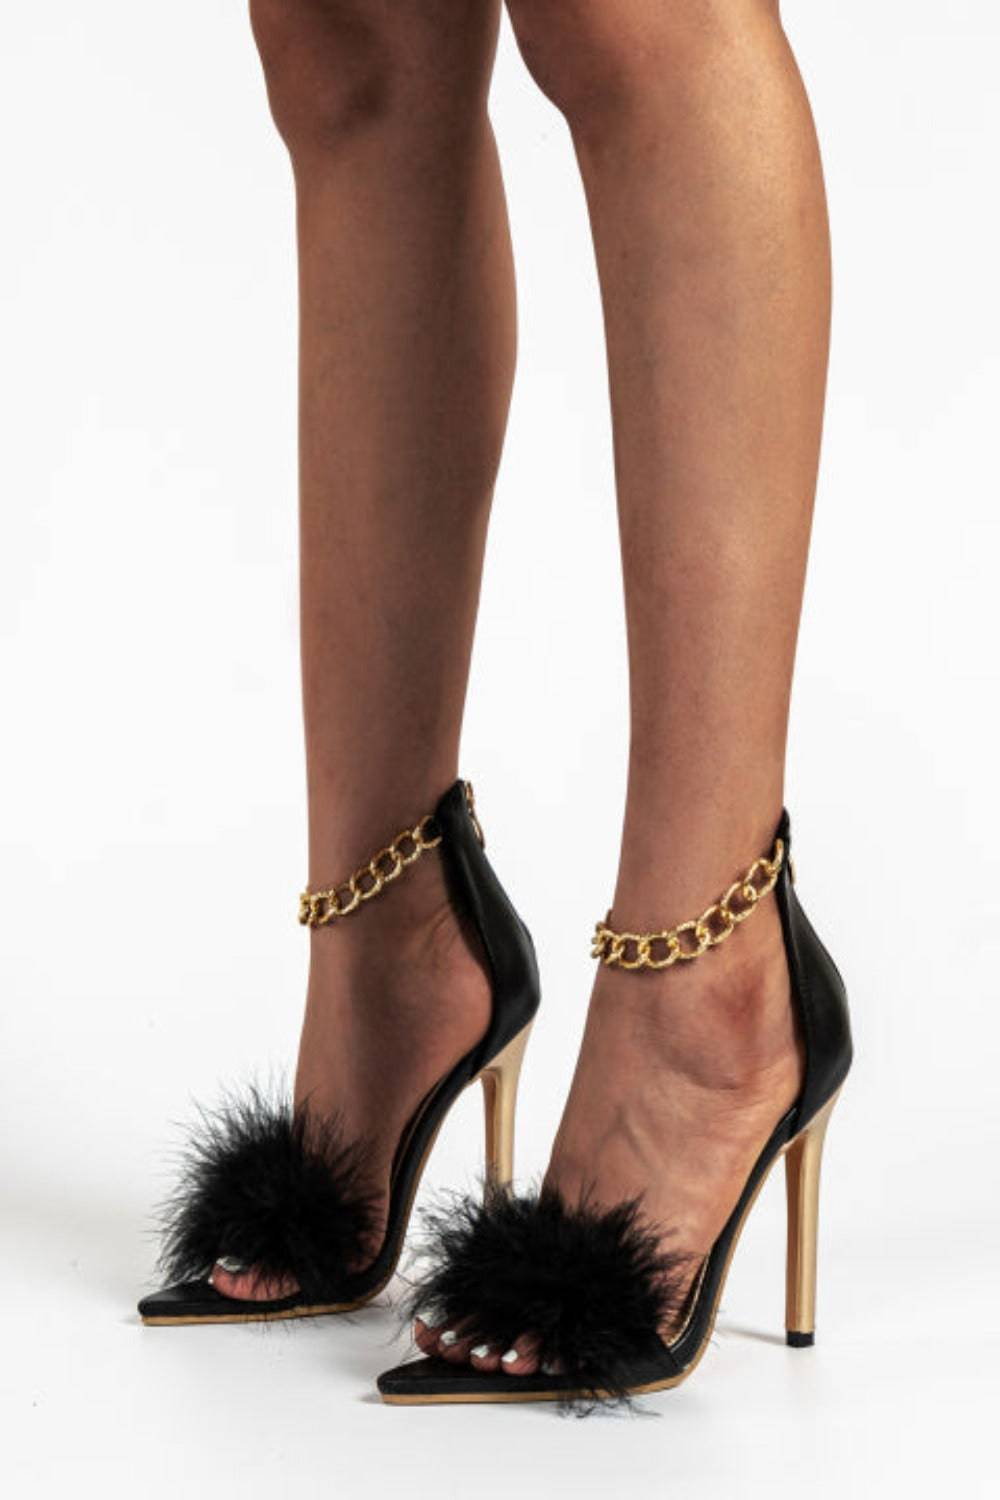 Black Stiletto High Heel Sandals Gold Chain Fluffy Fur Shoes - TGC Boutique - High Heel Sandals